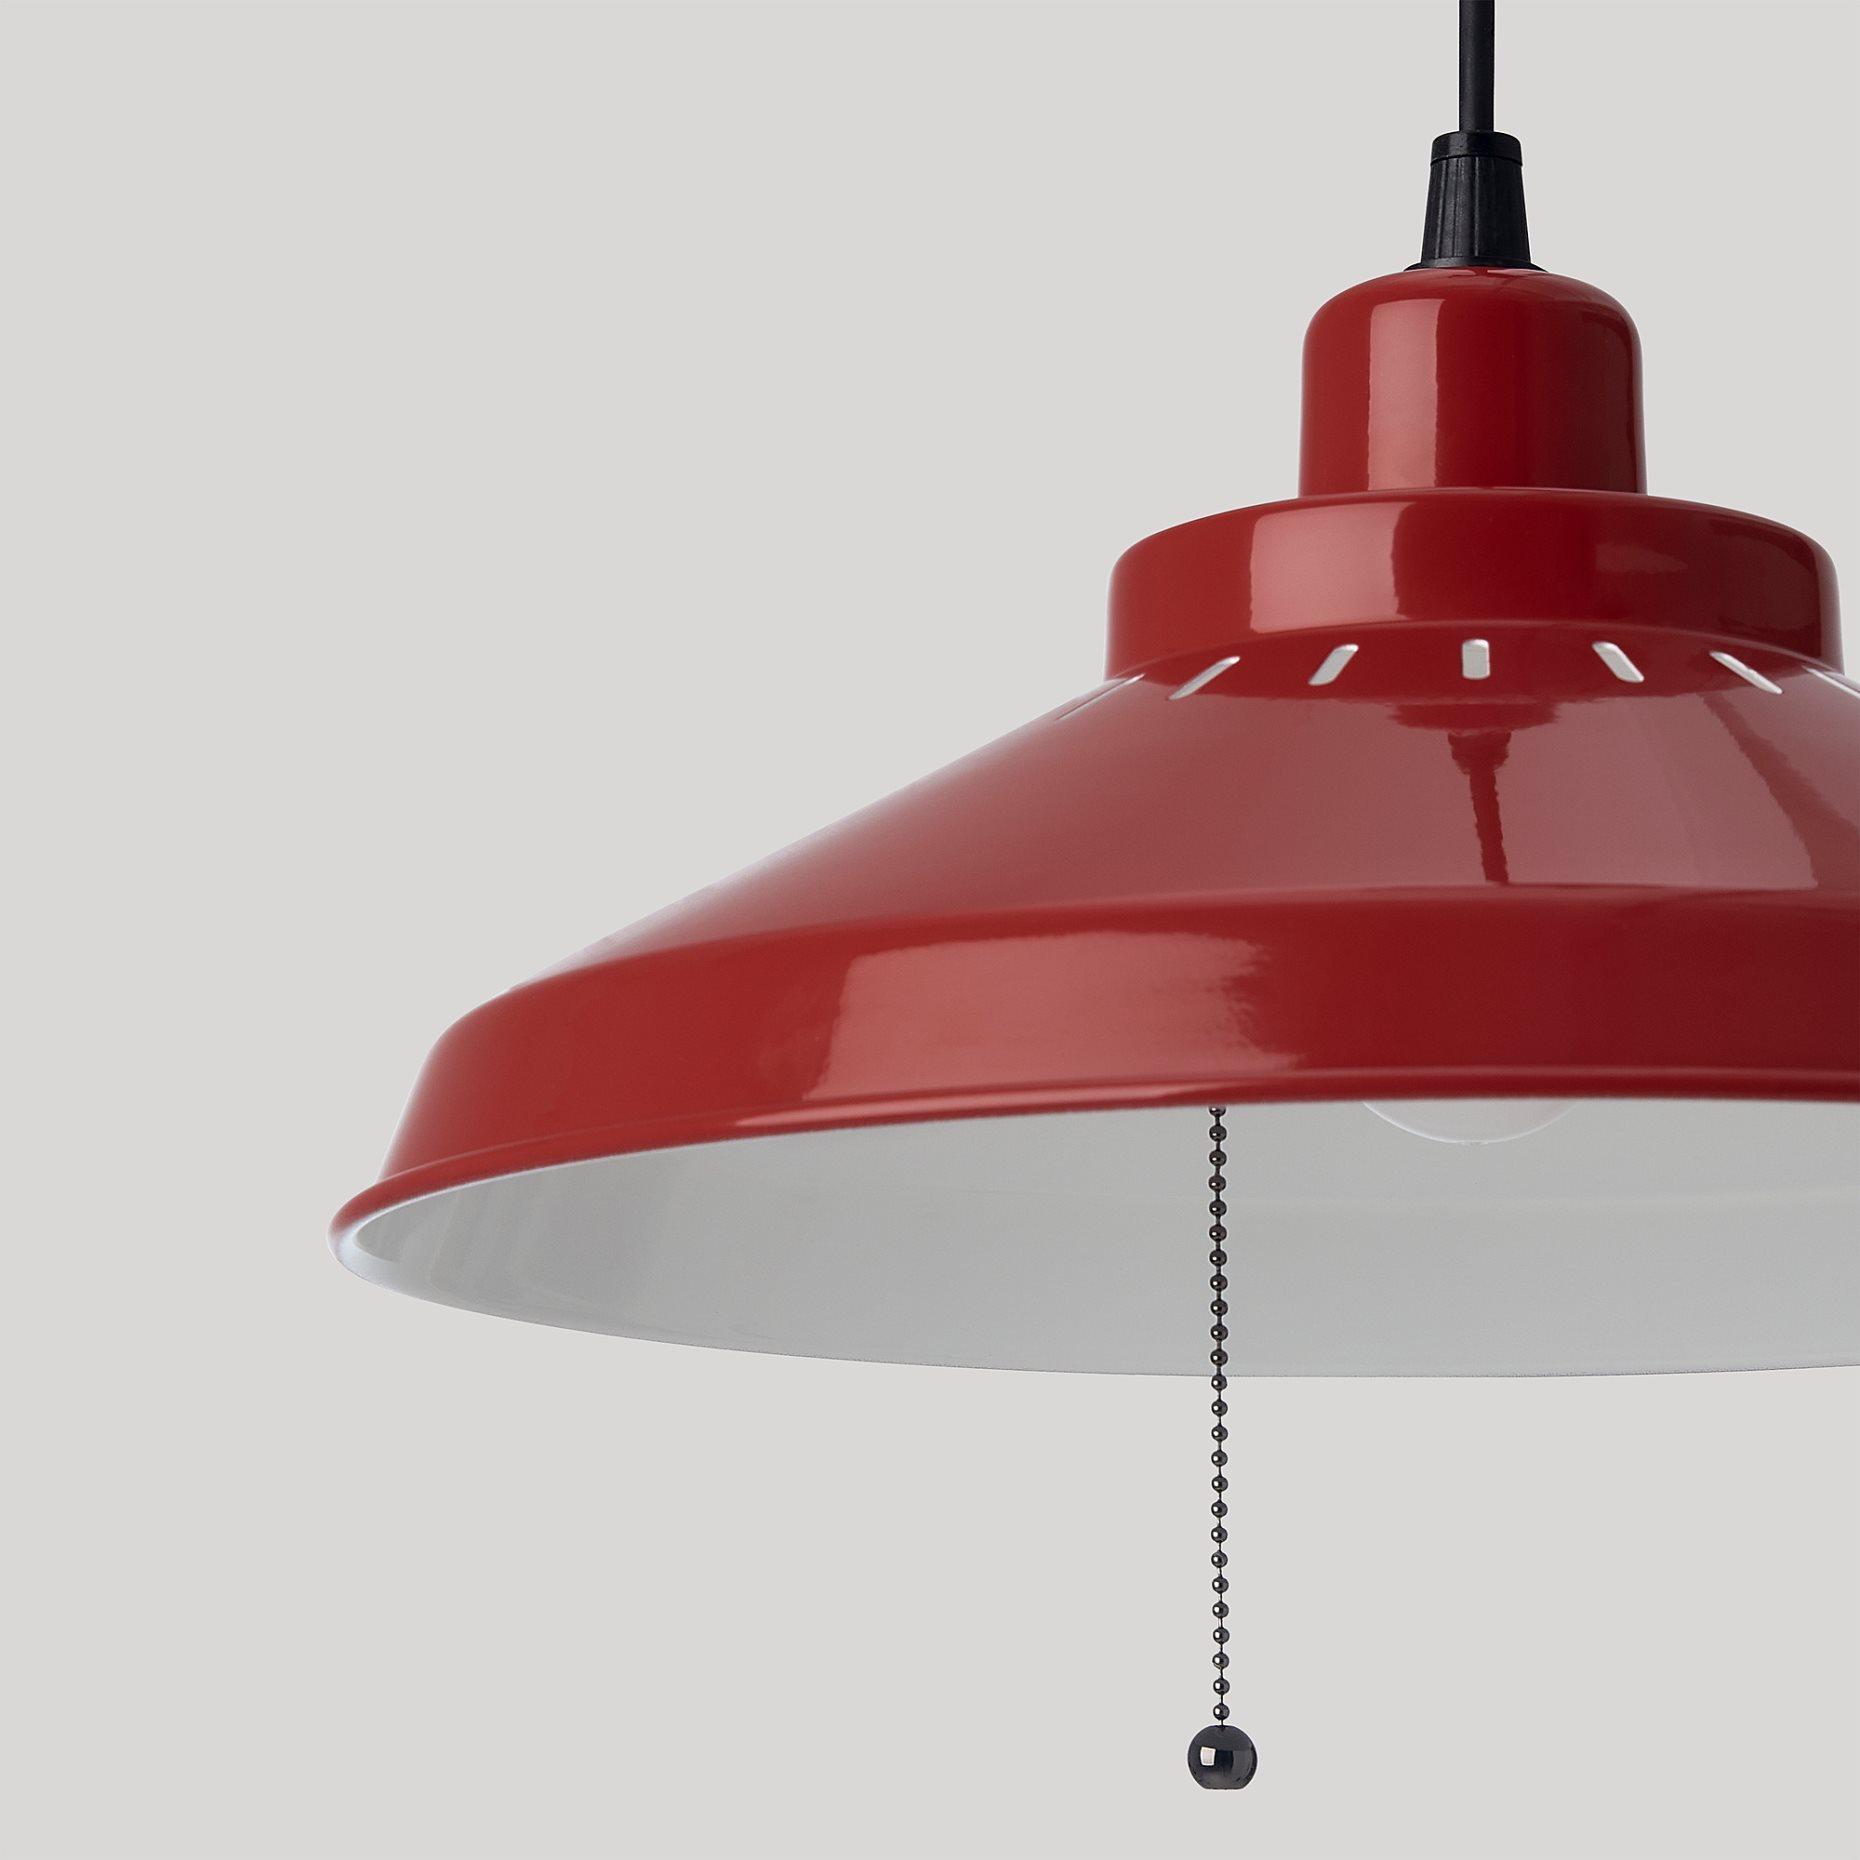 SOMMARLÅNKE, pendant lamp with built-in LED light source/outdoor, 38 cm, 505.439.38